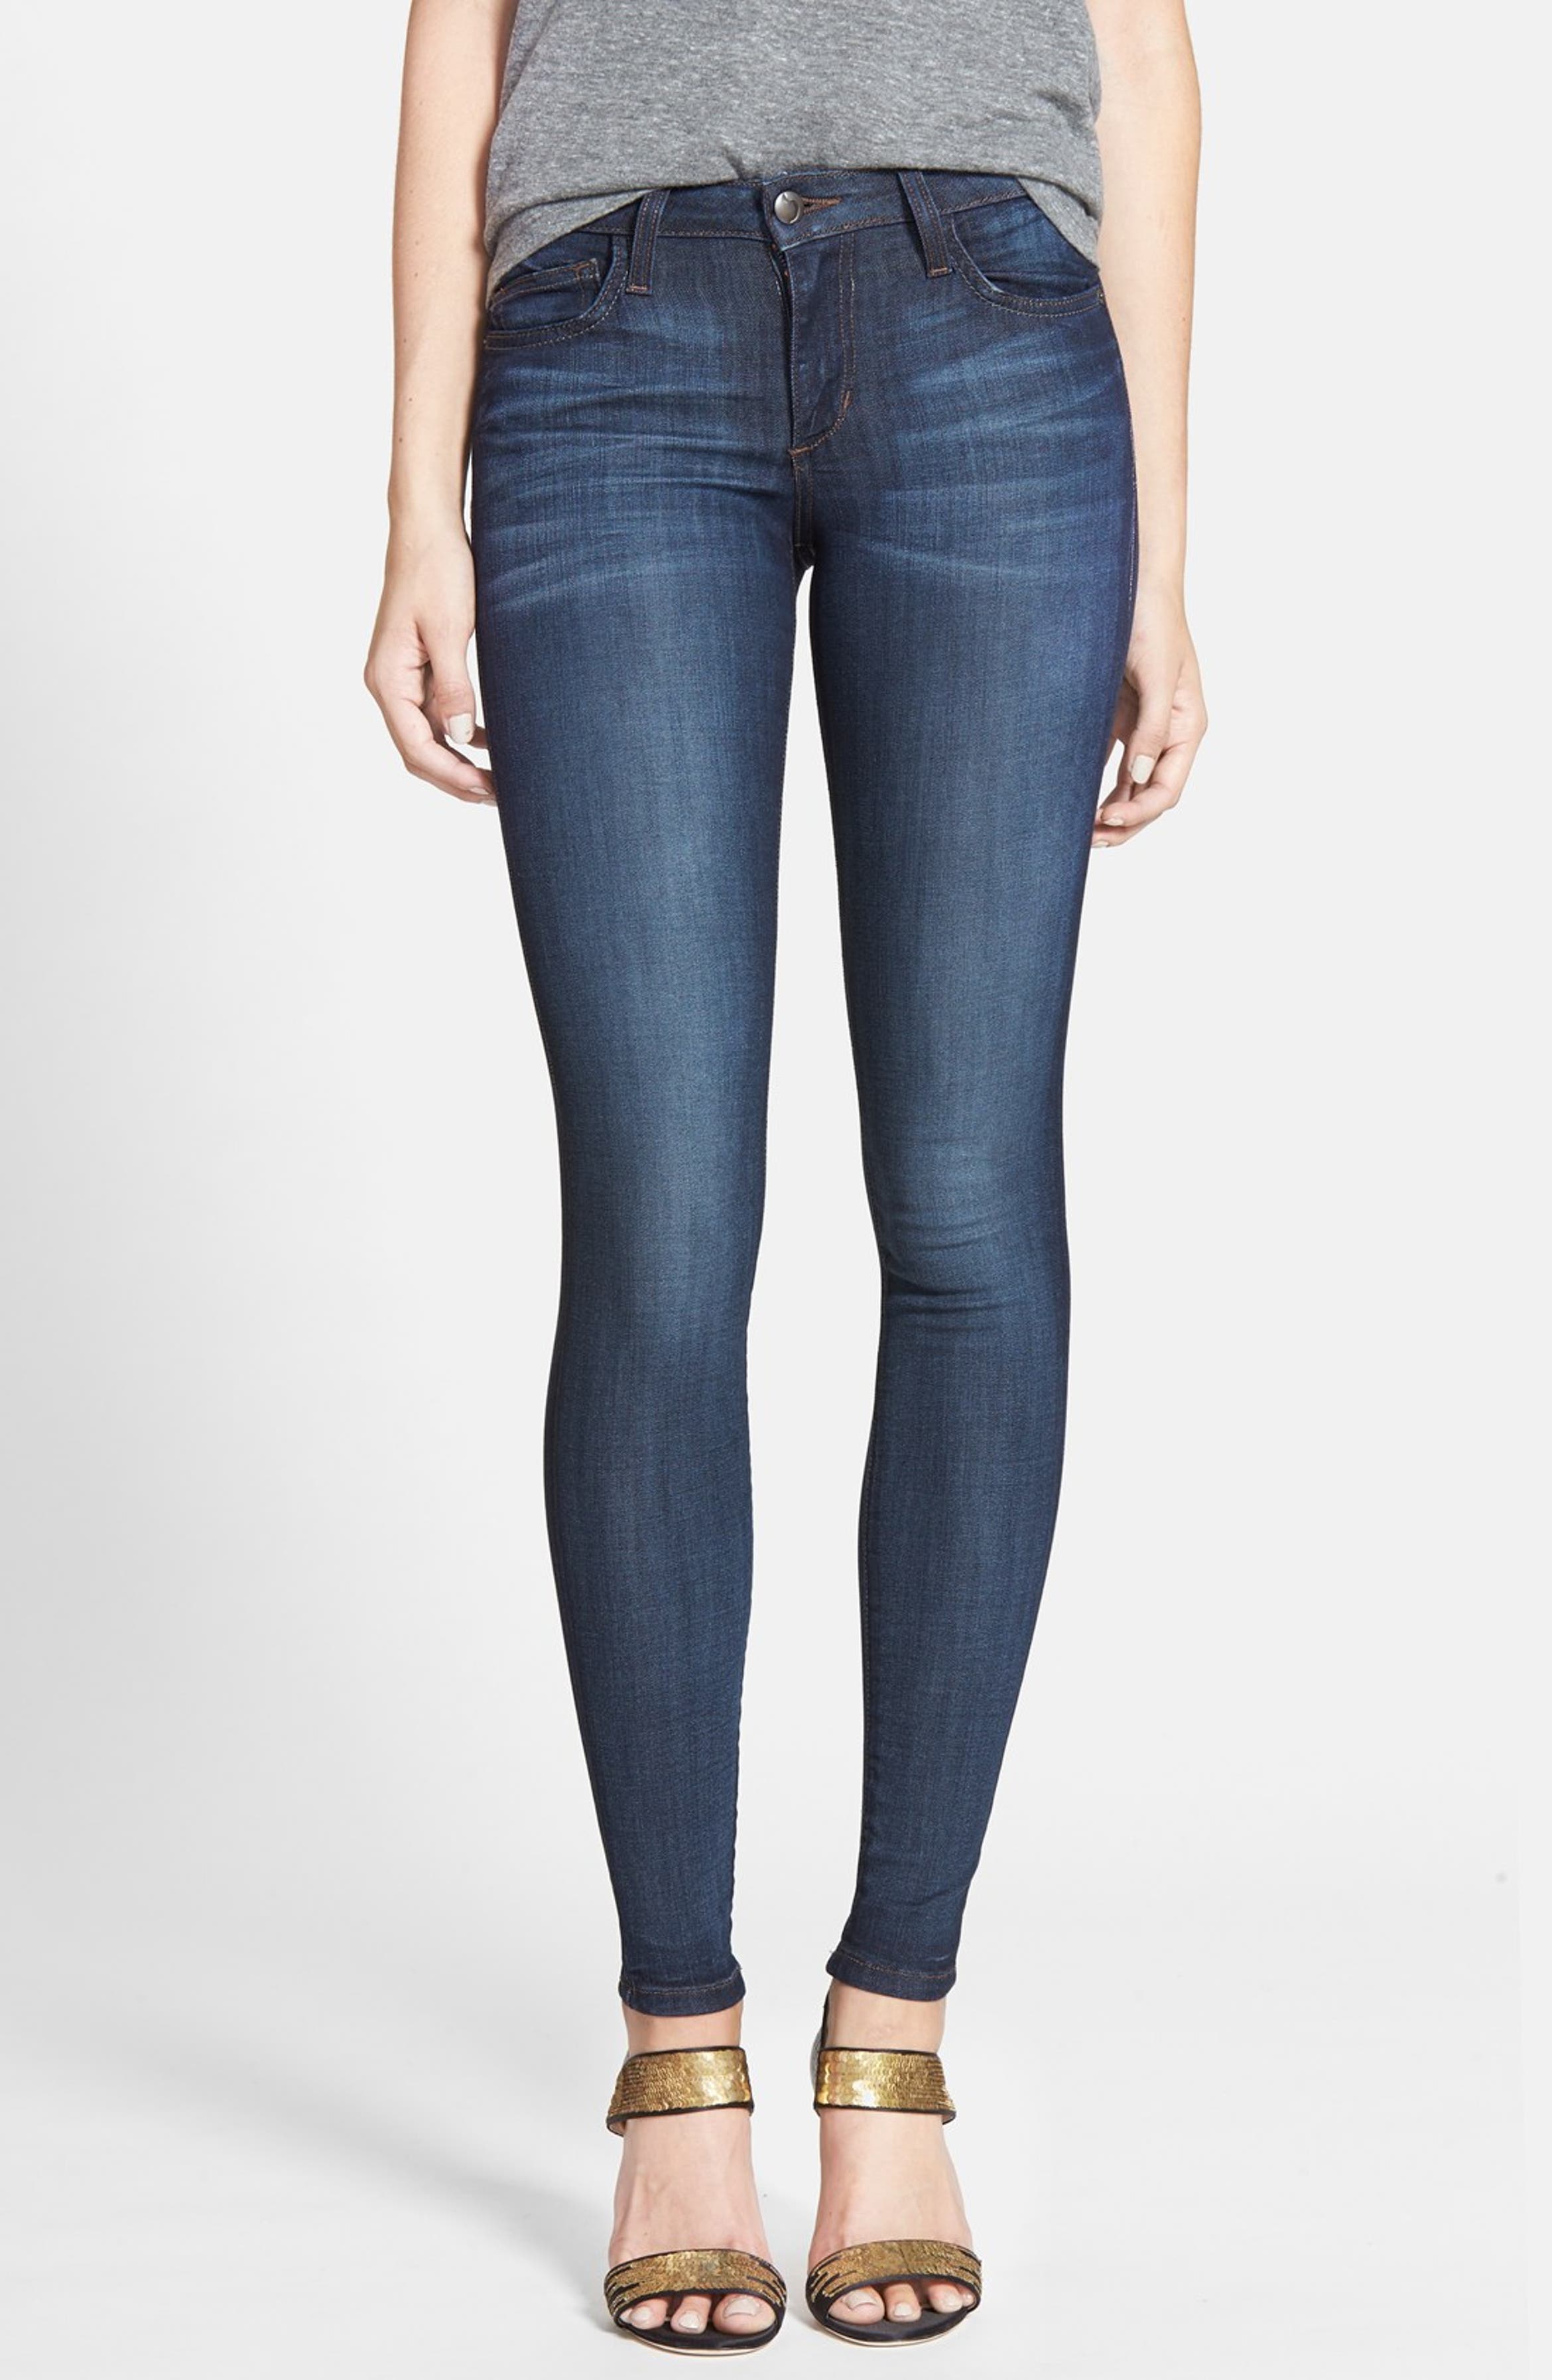 Petite Denim Jeans - Distressed, Skinny, Flare & Straight